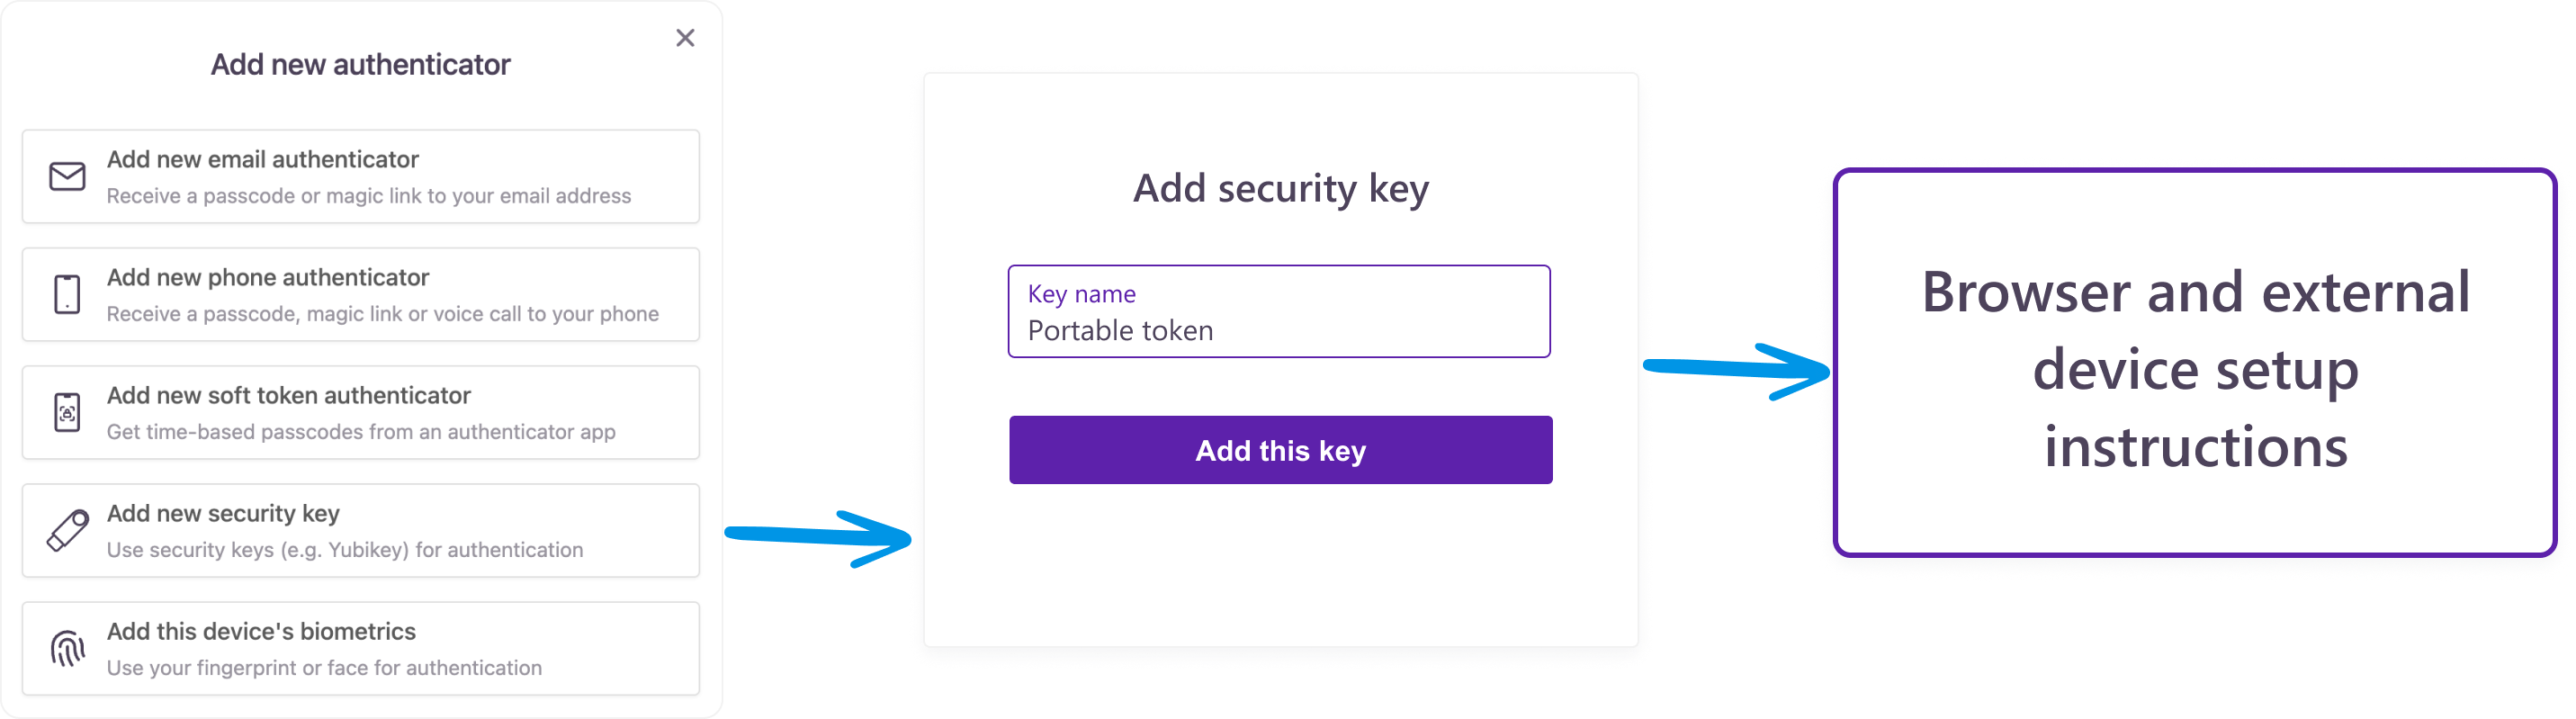 Add security key authenticator